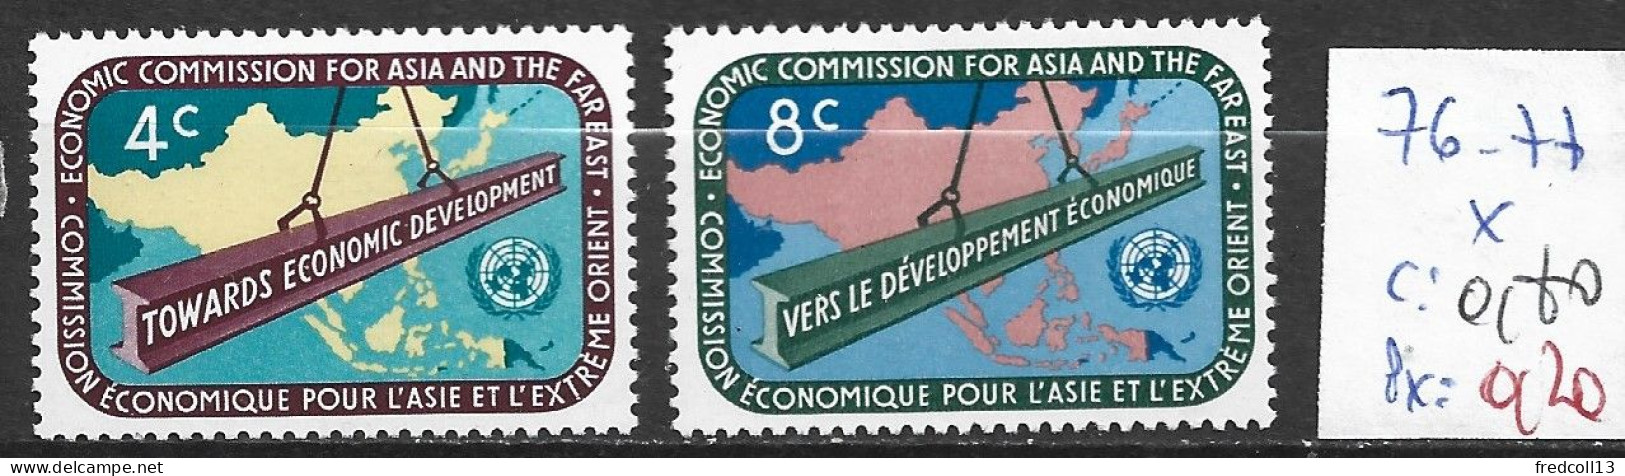 NATIONS UNIES OFFICE DE NEW-YORK 76-77 * Côte 0.80 € - Unused Stamps